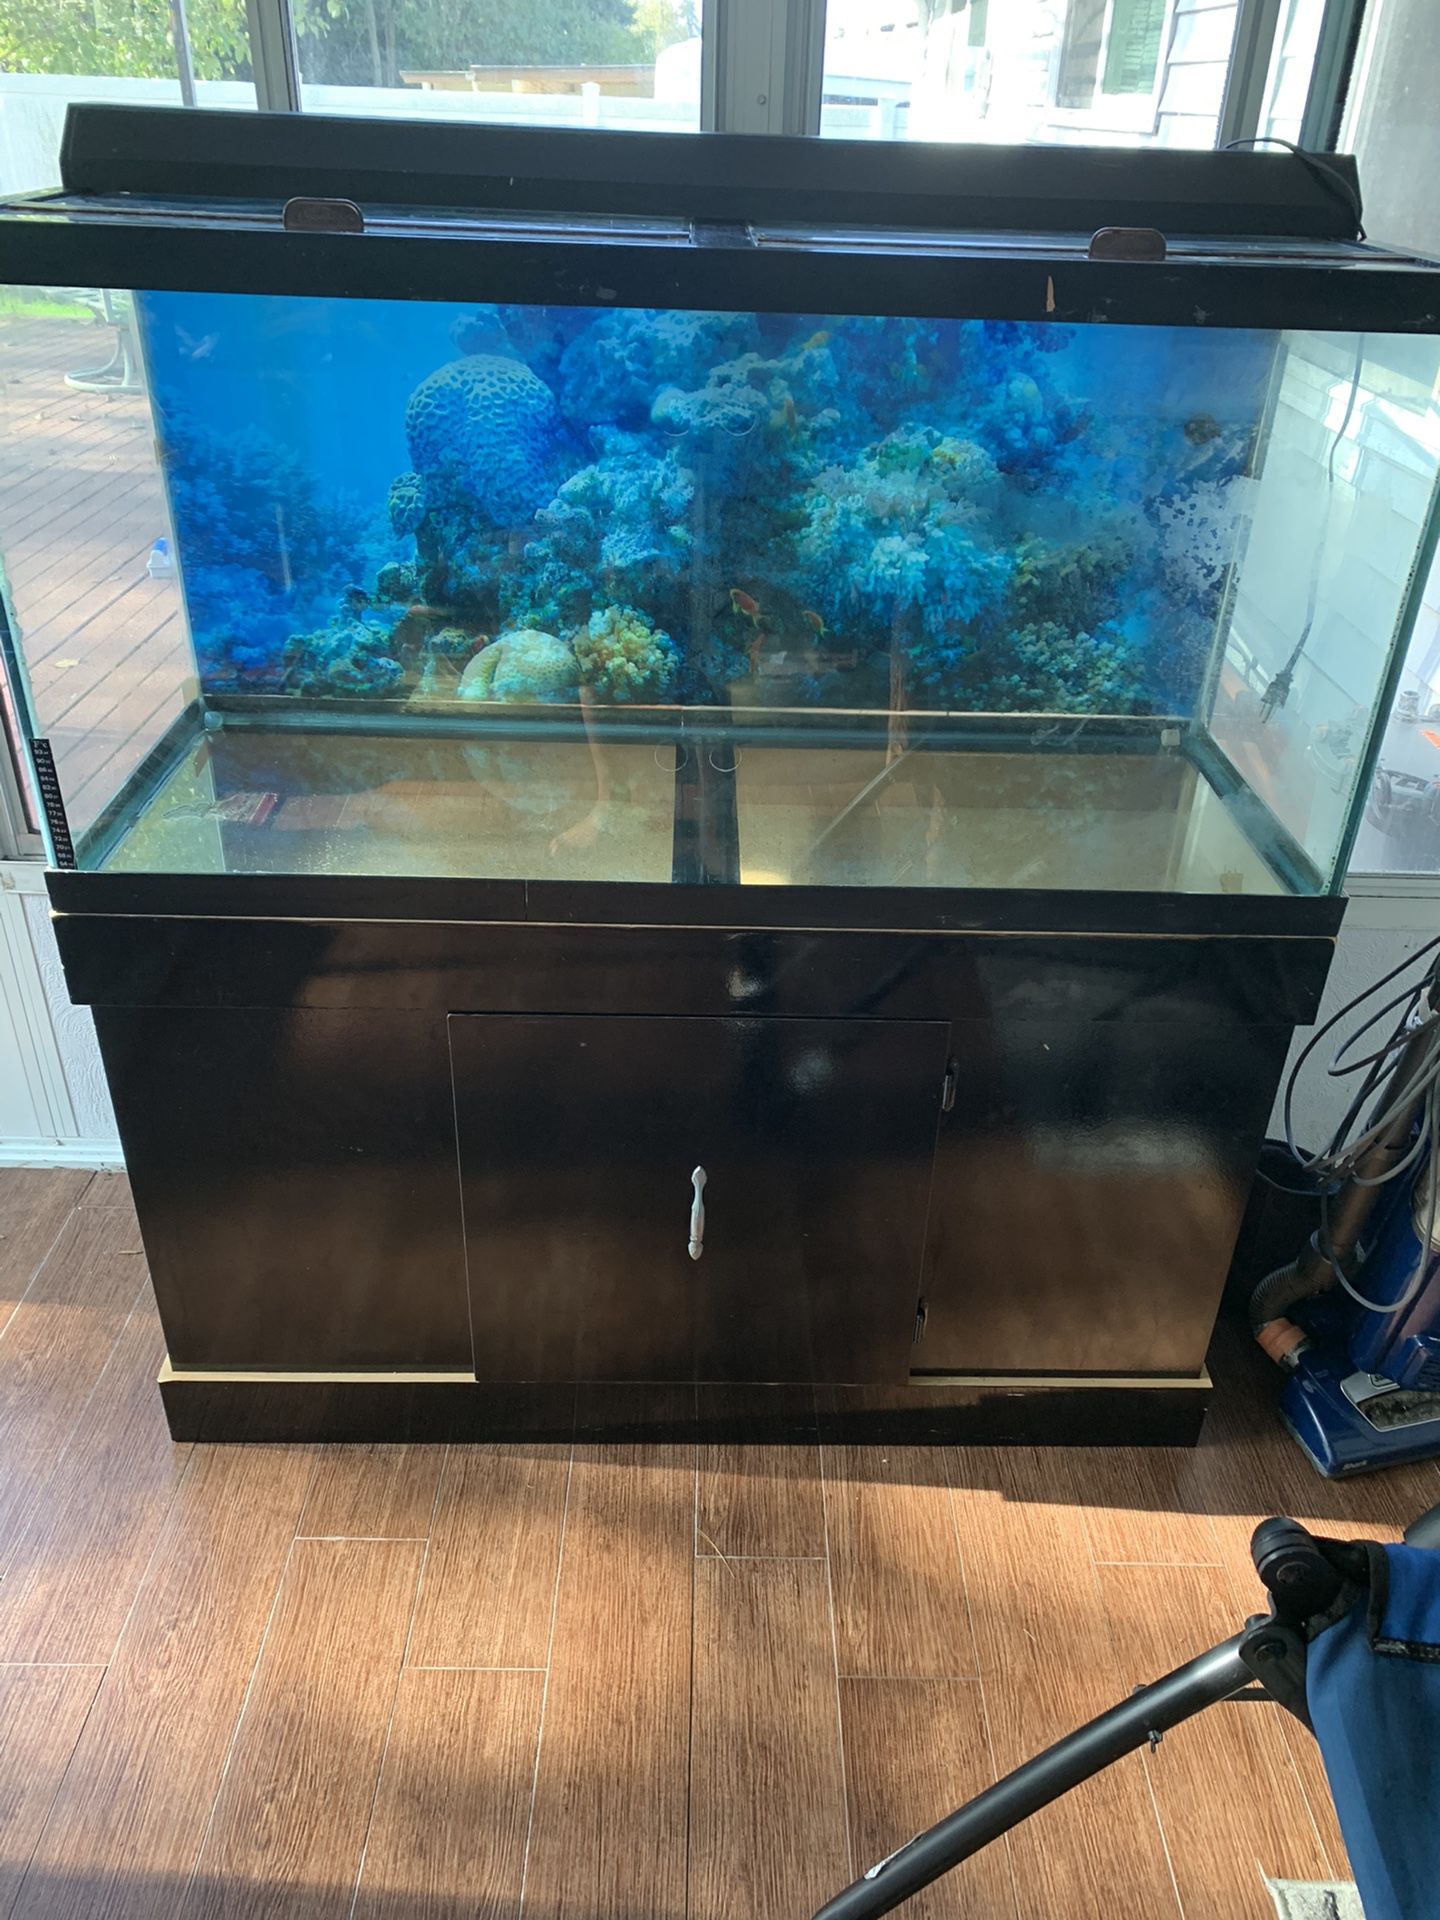 75 gallon fish tank with ligh